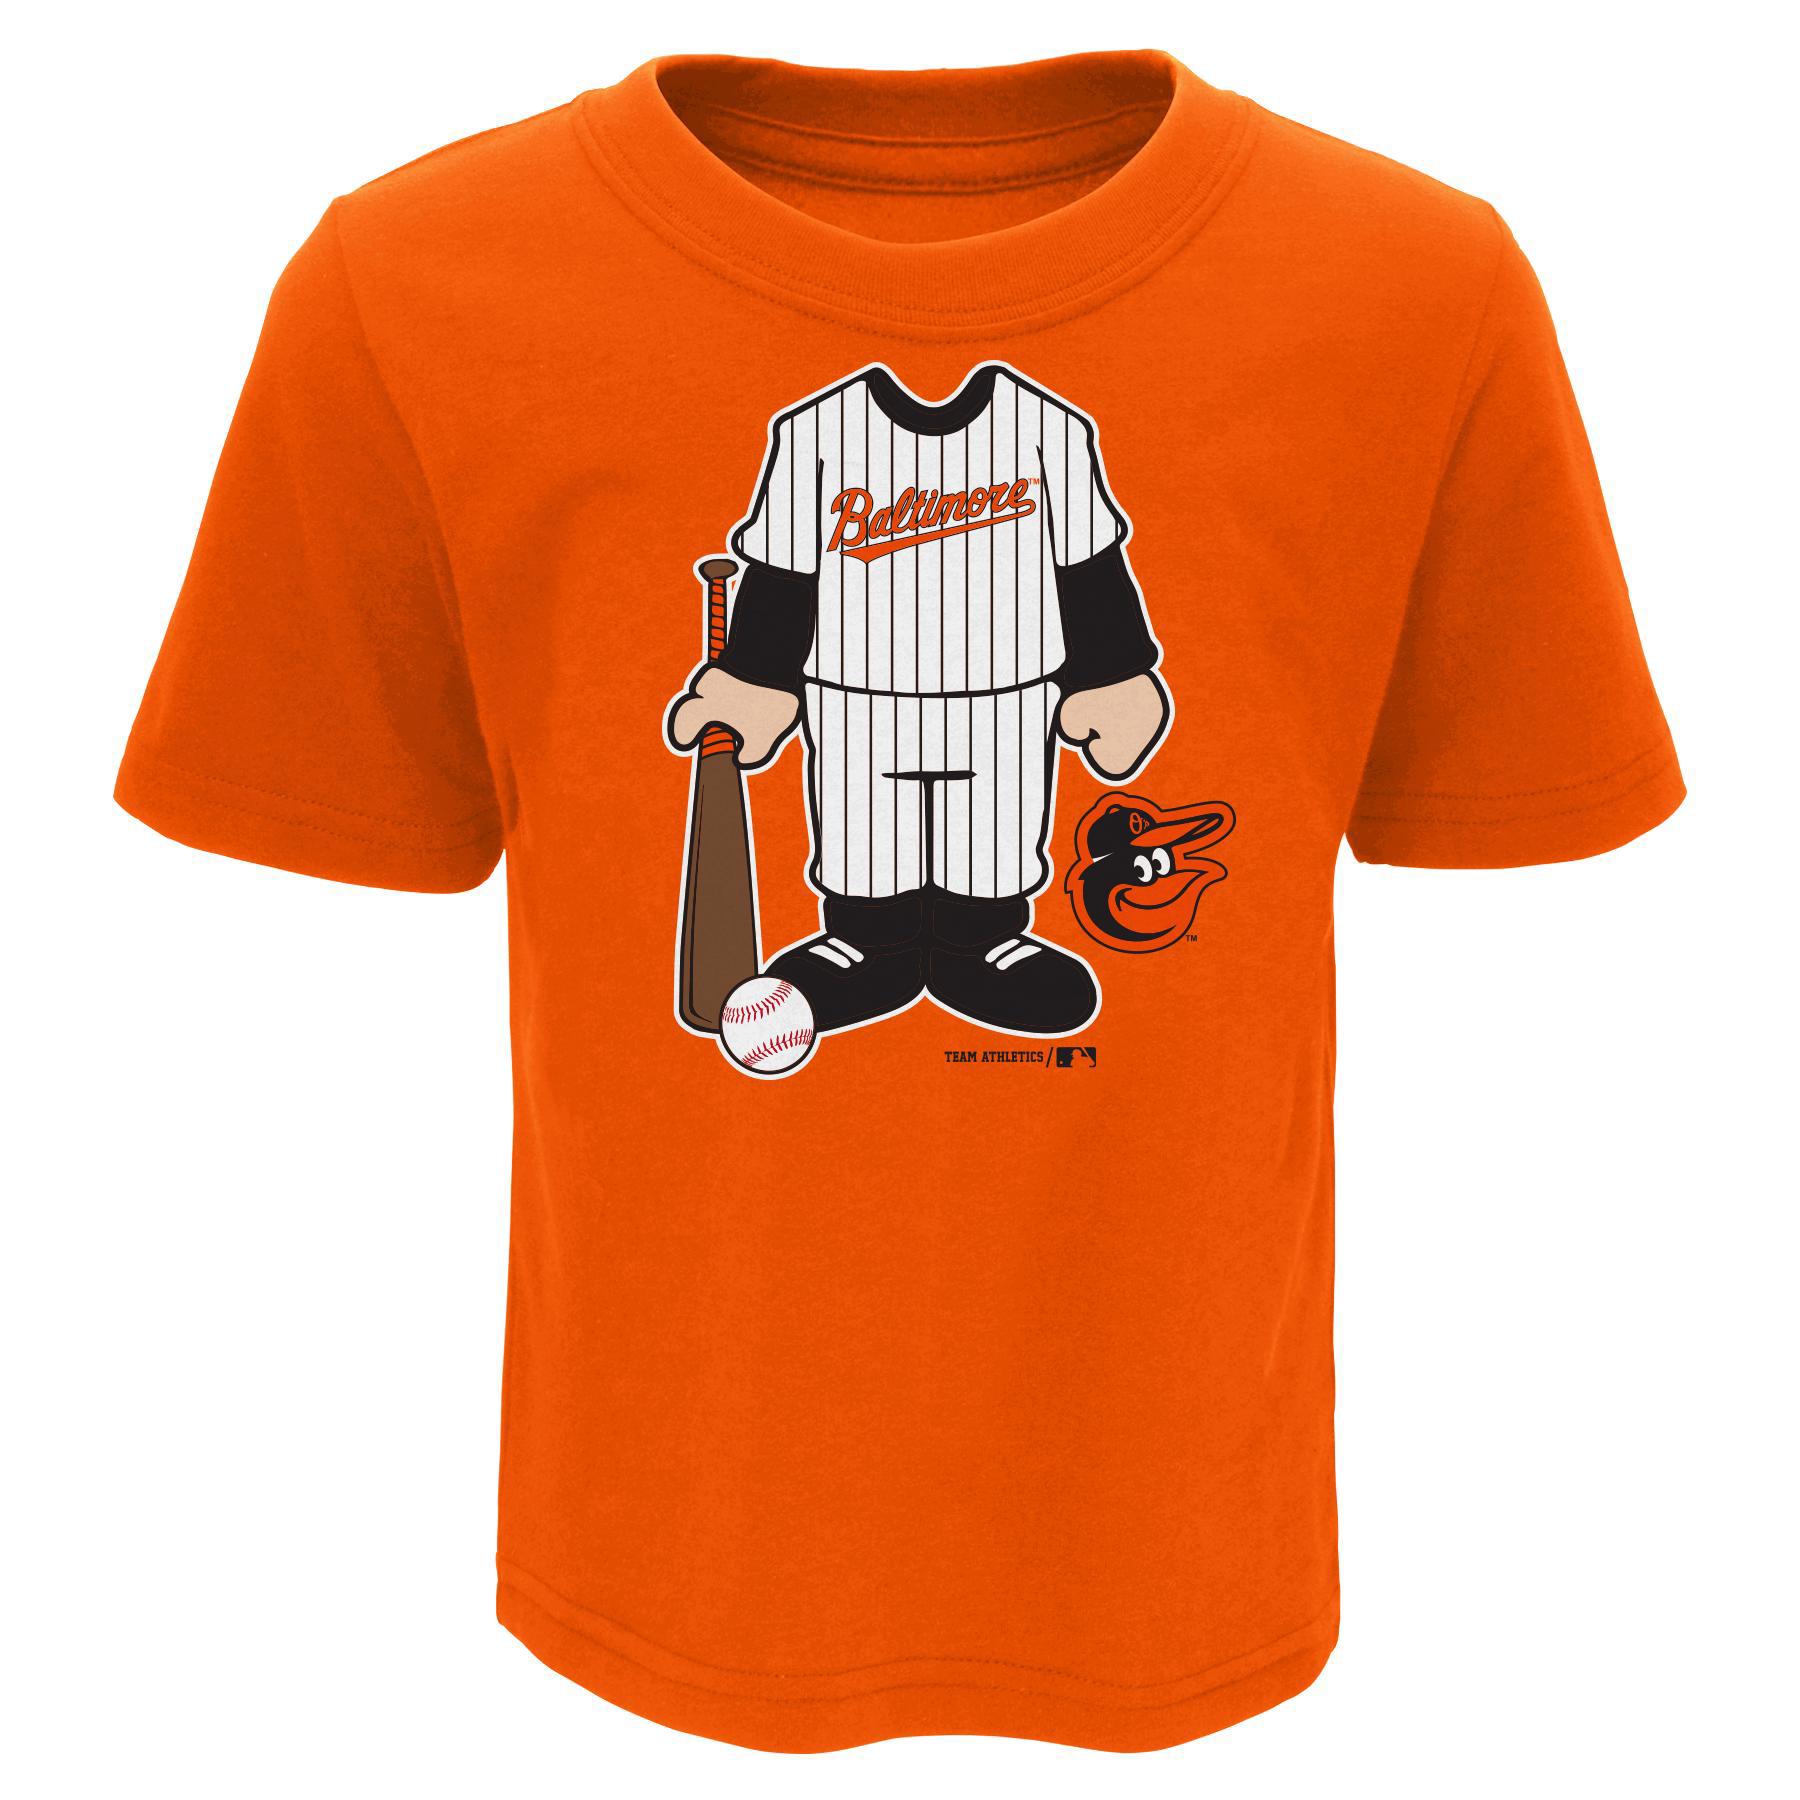 MLB Toddler Boys' T-Shirt - Baltimore Orioles